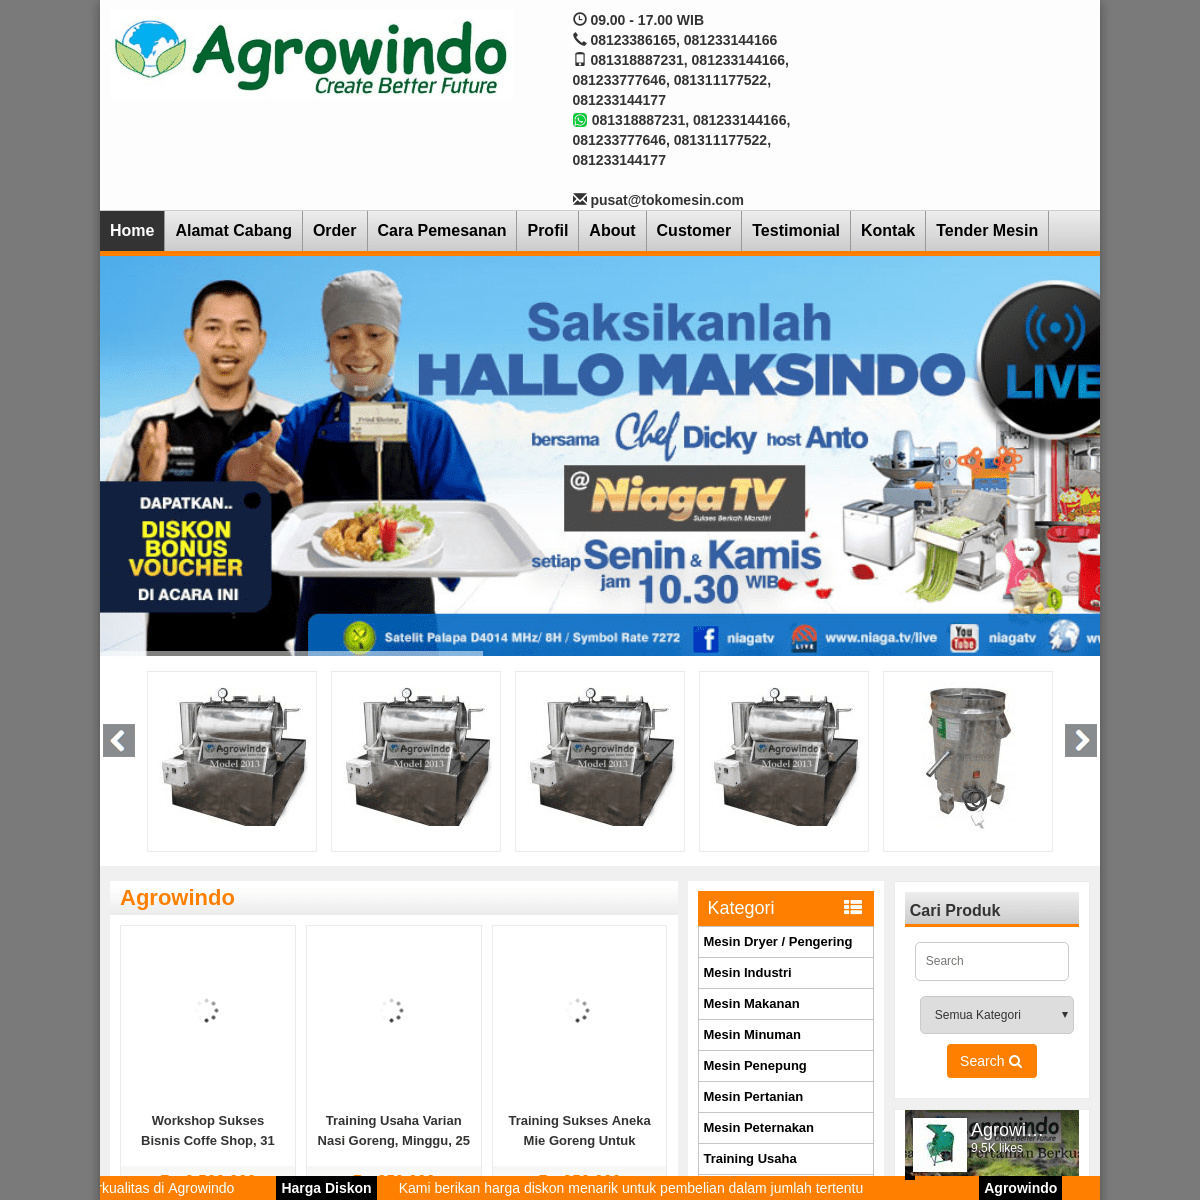 A complete backup of agrowindo.com